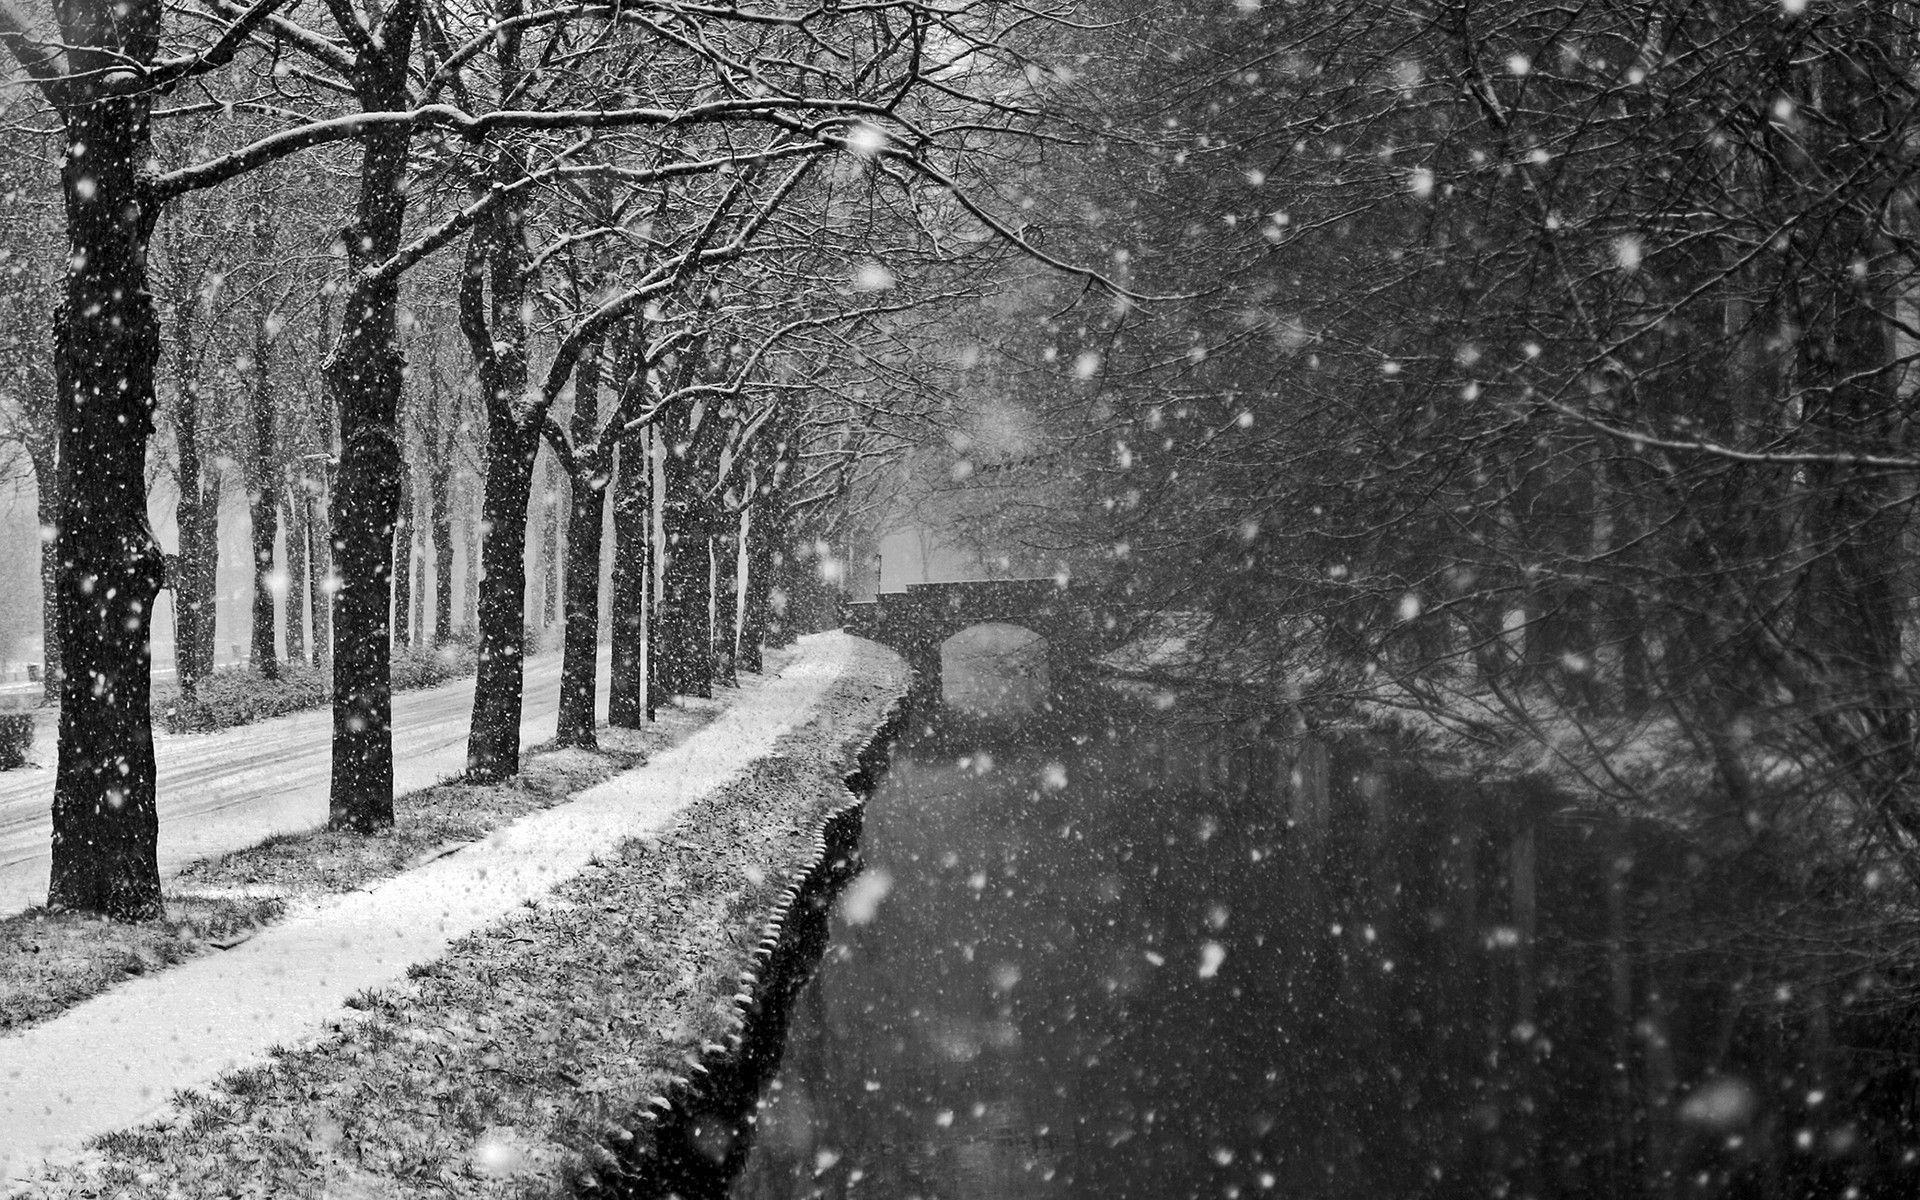 Landscapes winter trees snow flakes storm blizzard wallpaper